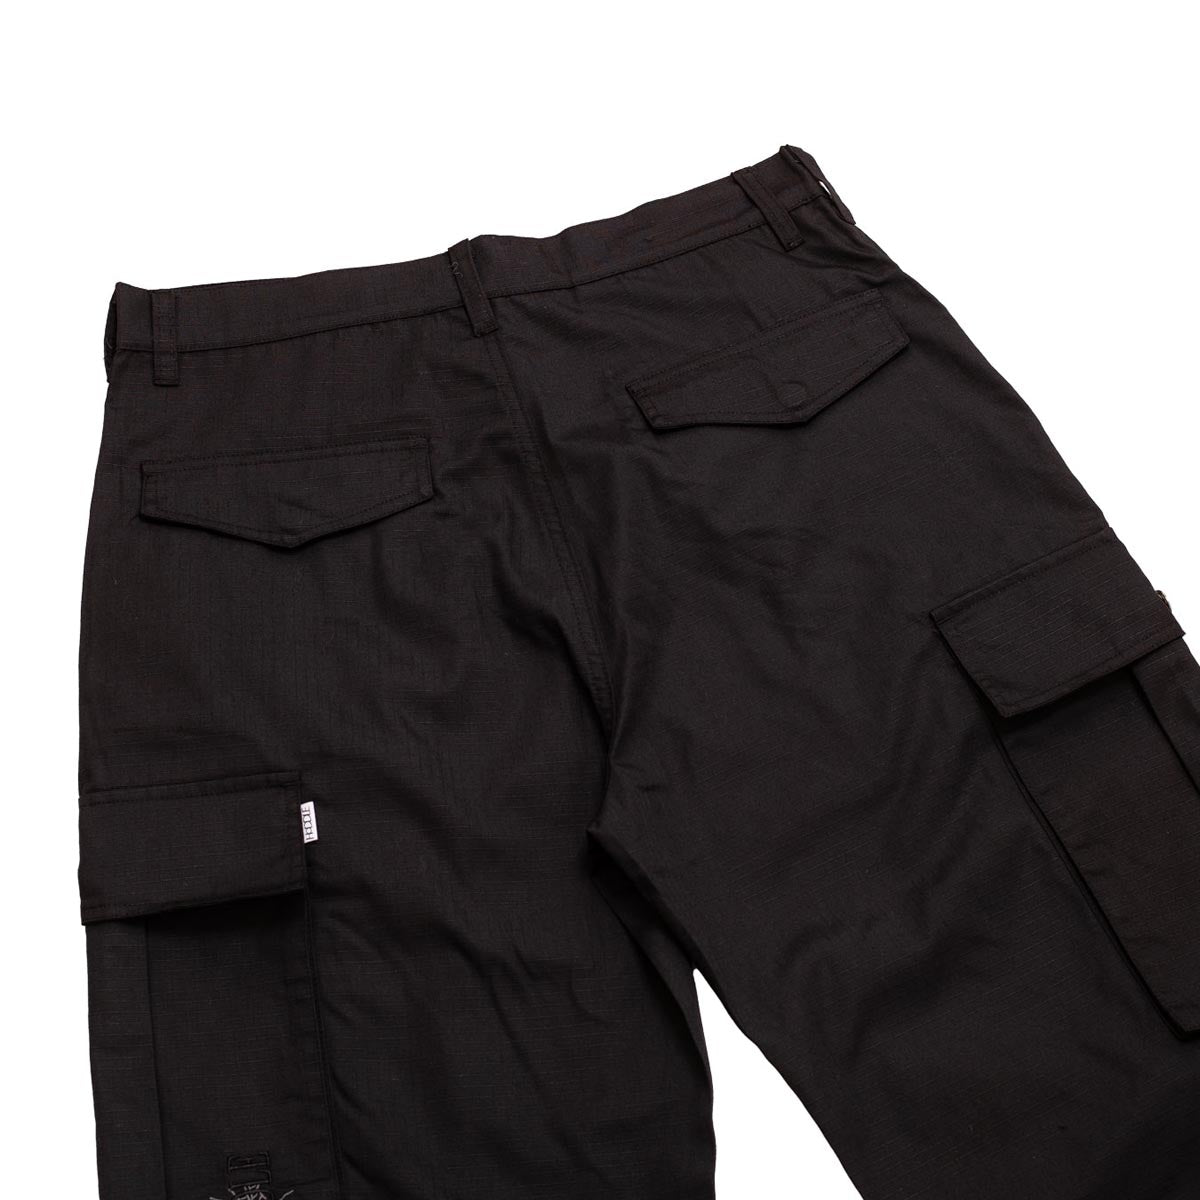 Hoddle Pleated Rip Stop Cargo Pants - Black image 5